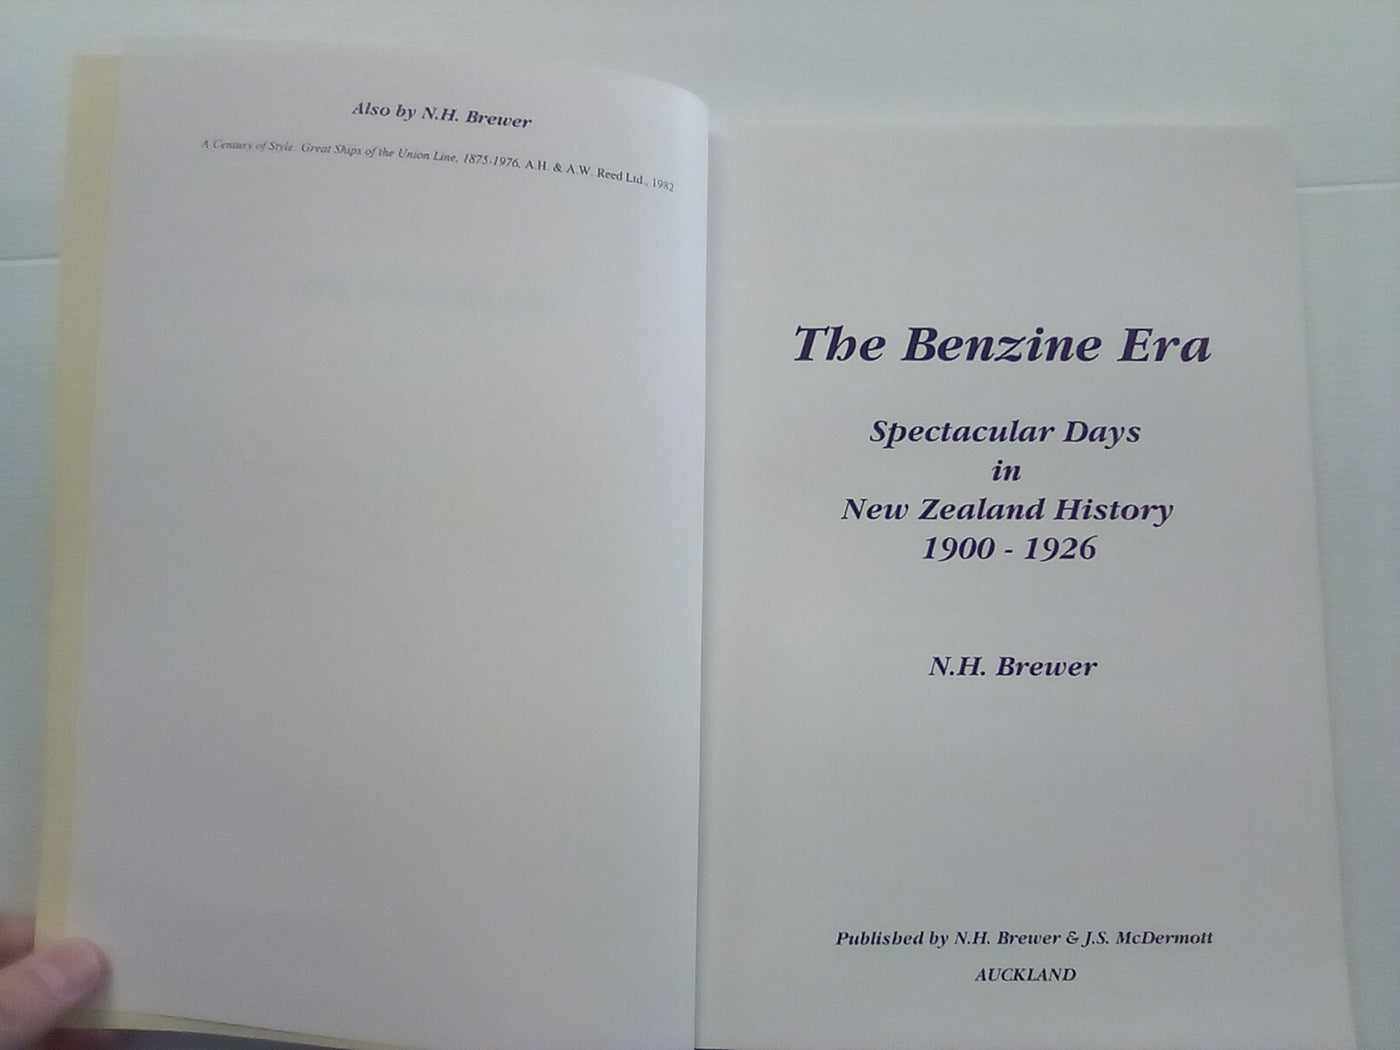 The Benzine Era in New Zealand 1900-1926 by N.H. Brewer